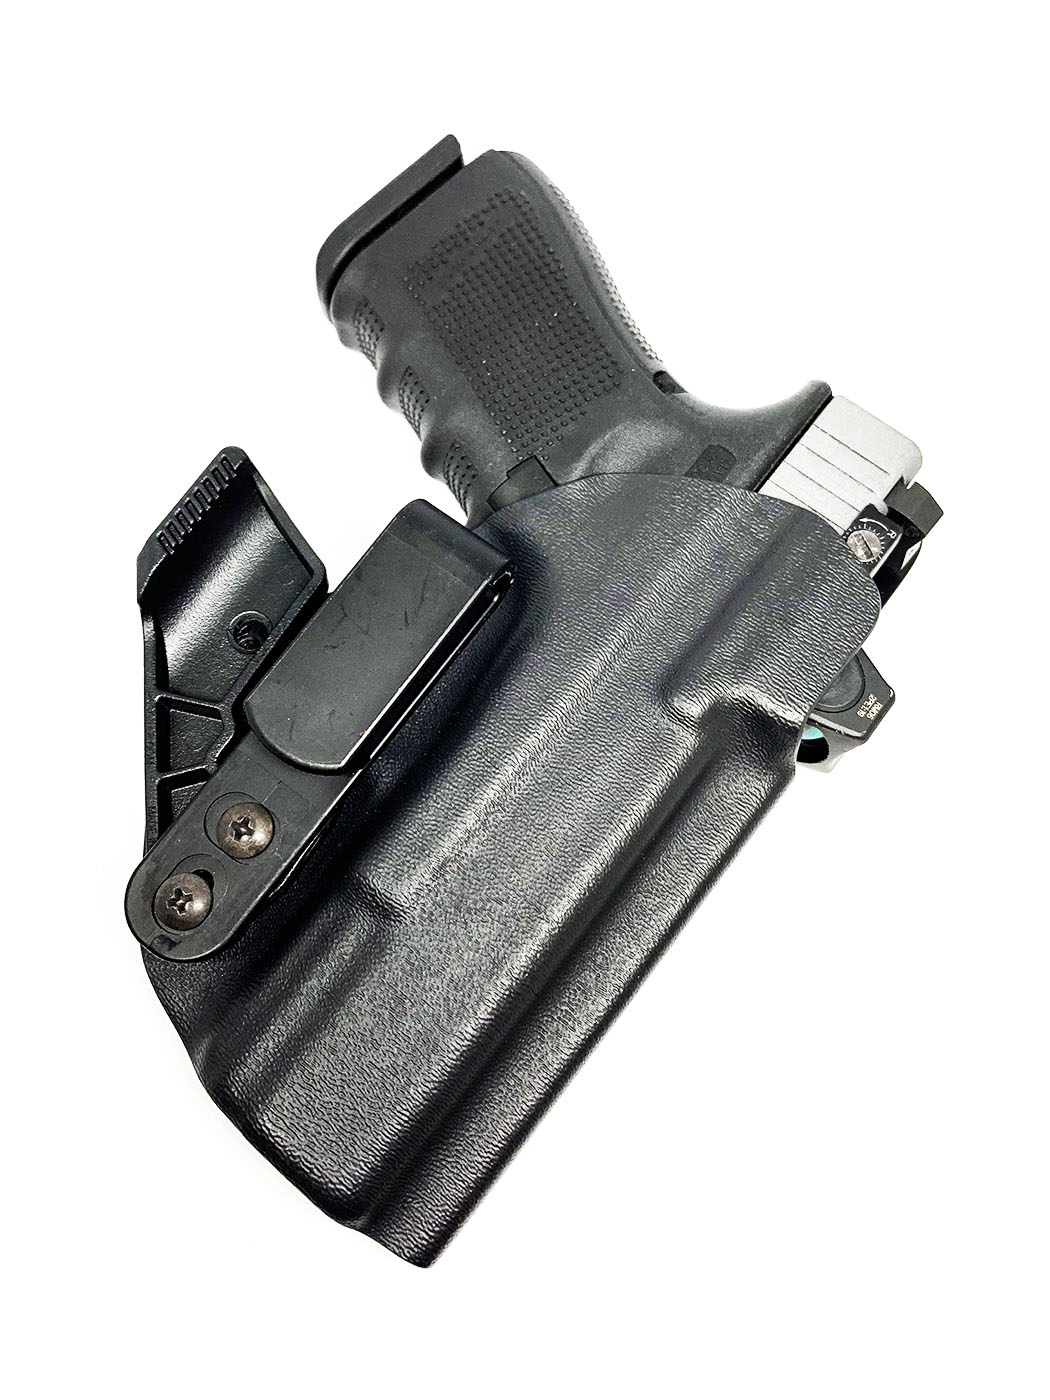 Optic cut Glock 19 Appendix Holster